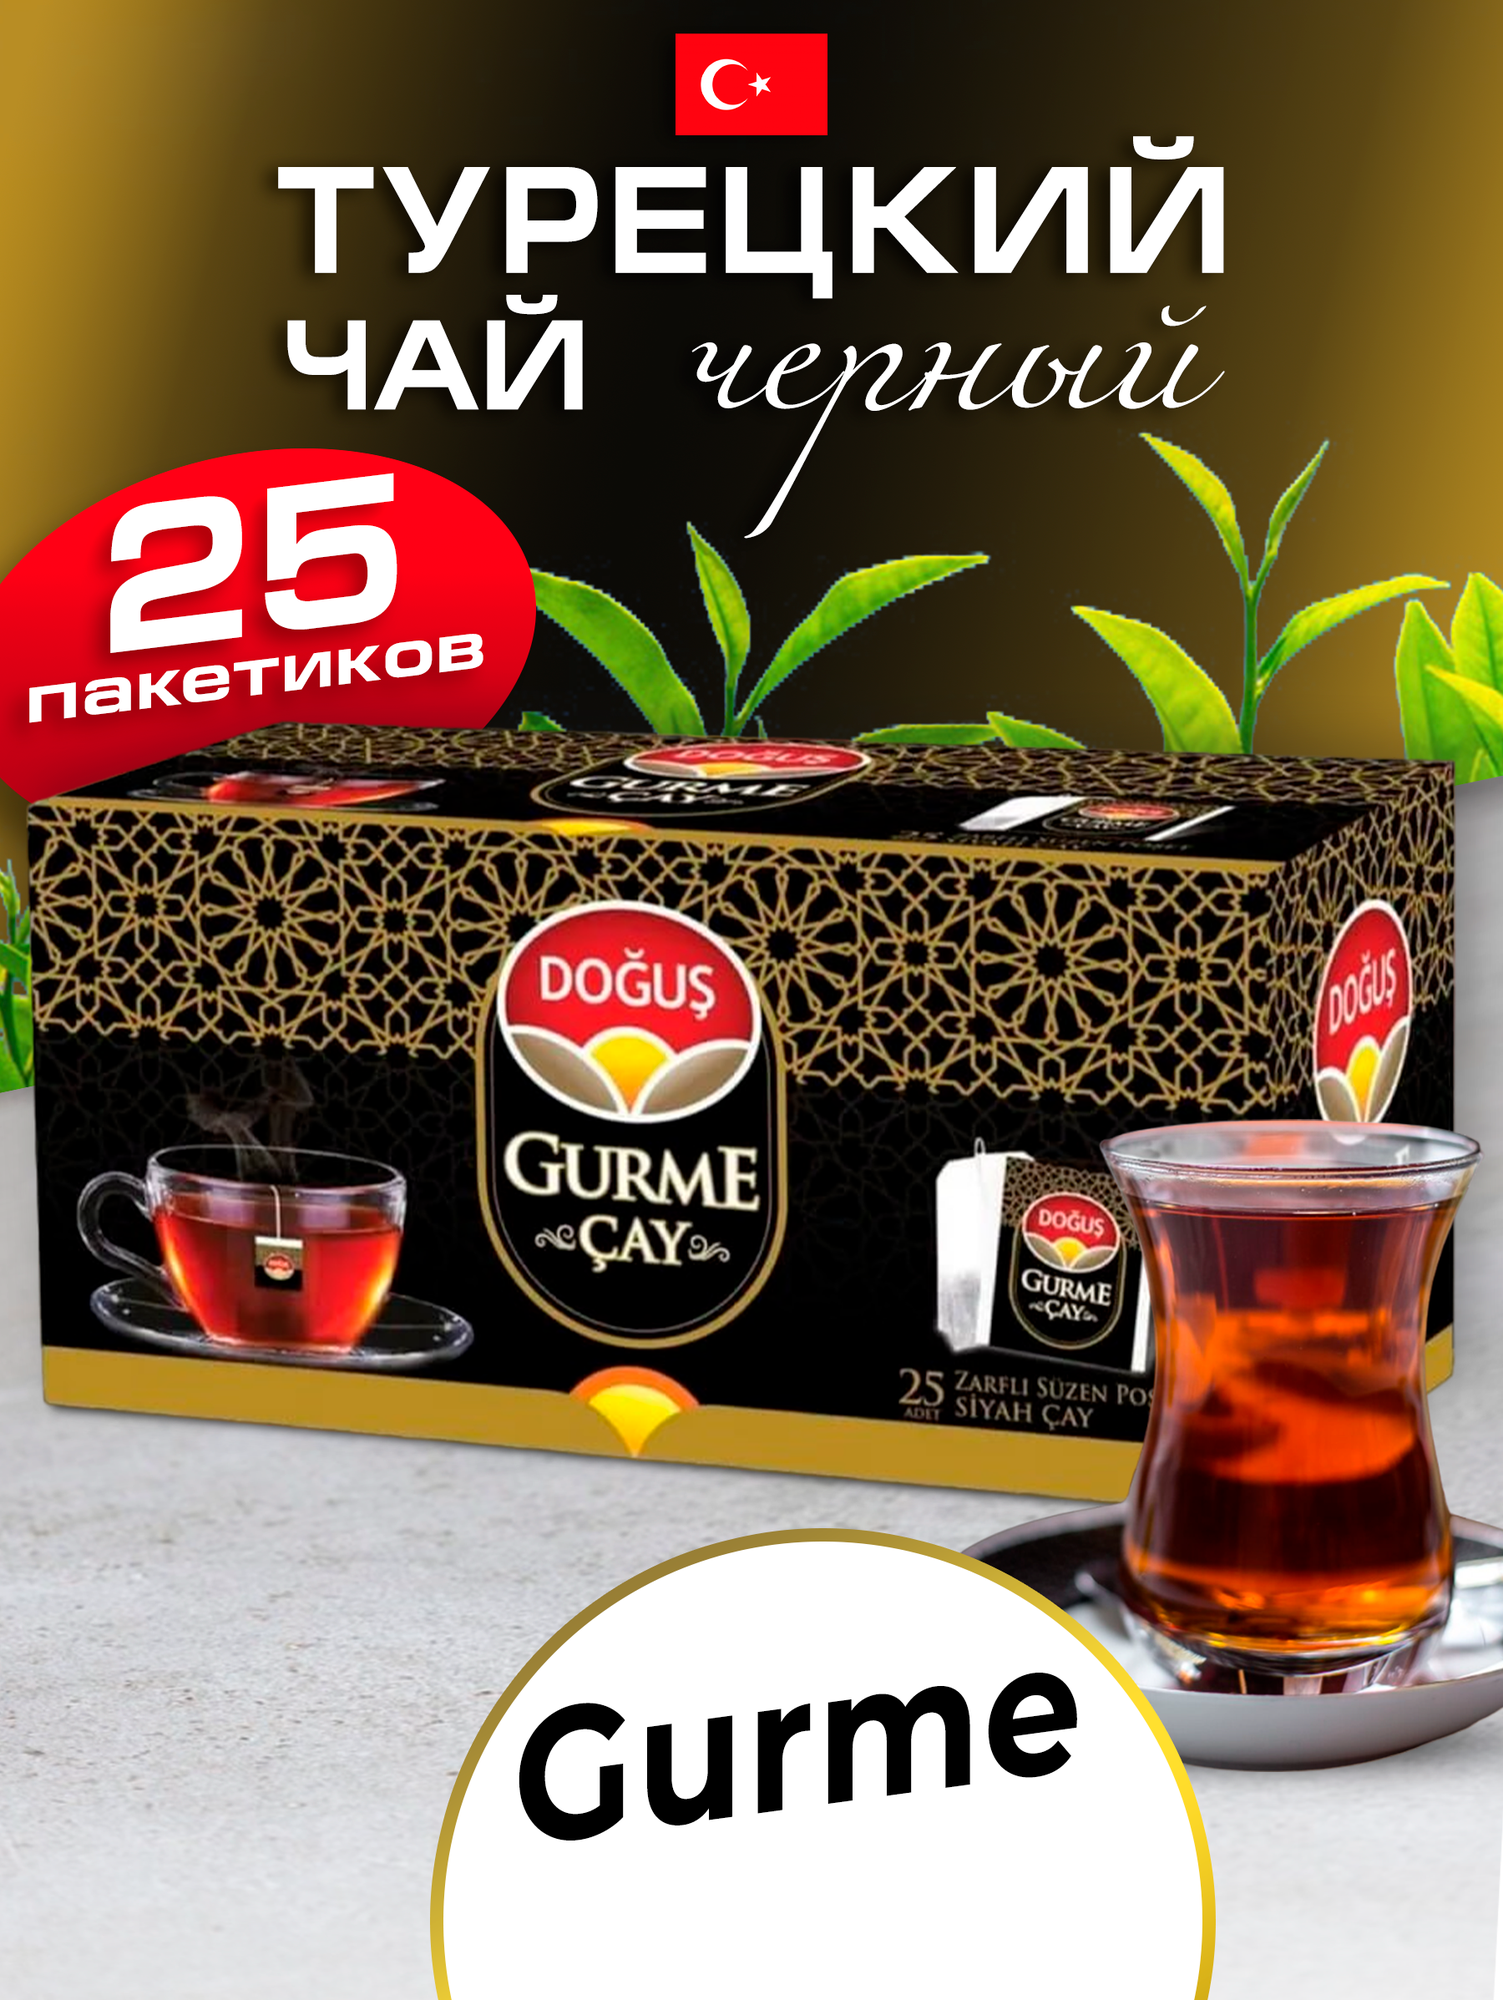 Турецкий Dogus Gurme чай в пакетиках 25 шт.